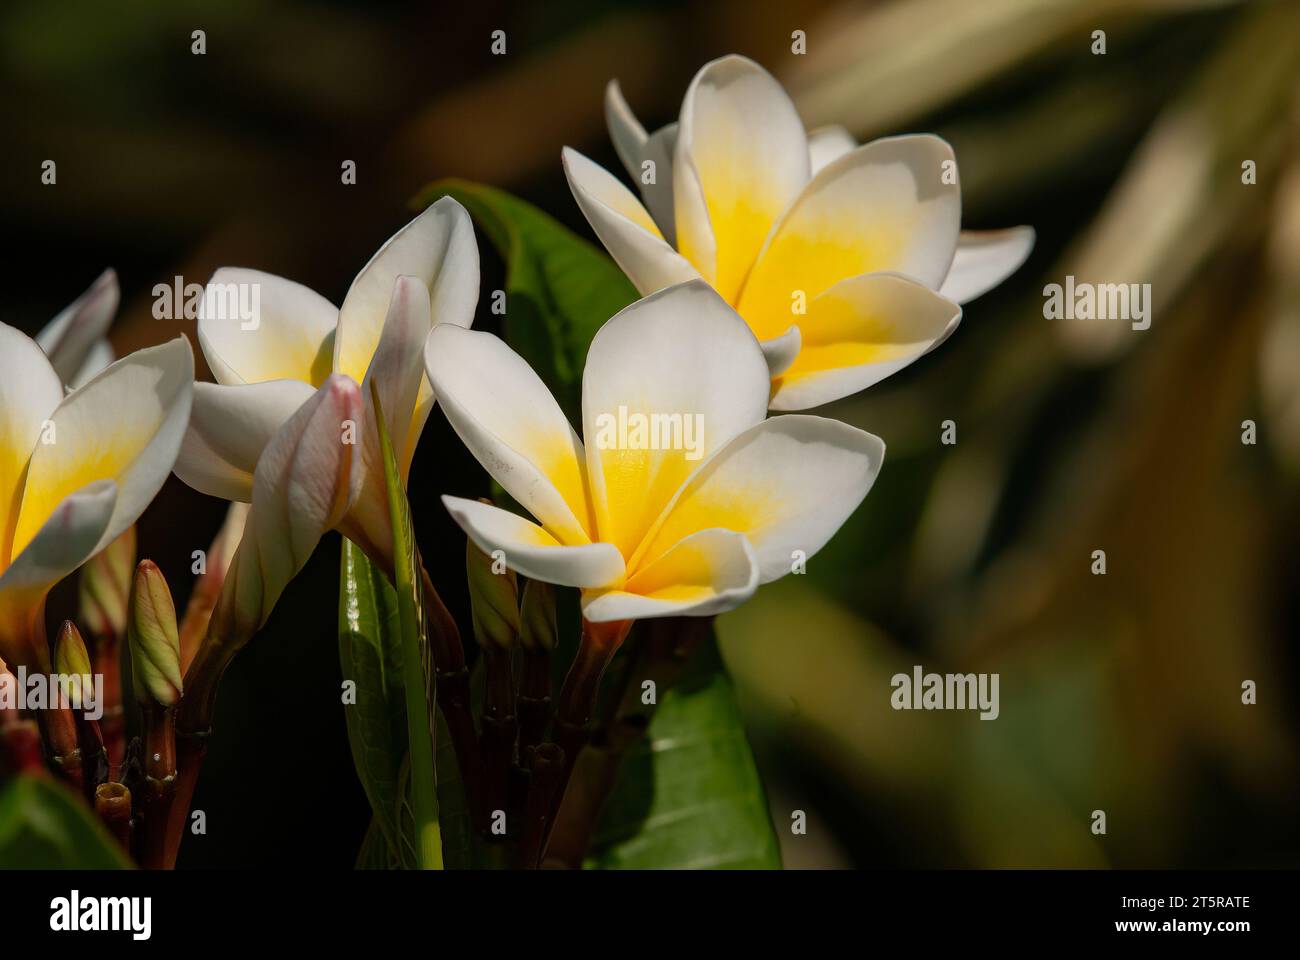 Plumeria (common name frangipani) is a genus of flowering plants in the dogbane family, Apocynaceae. Stock Photo